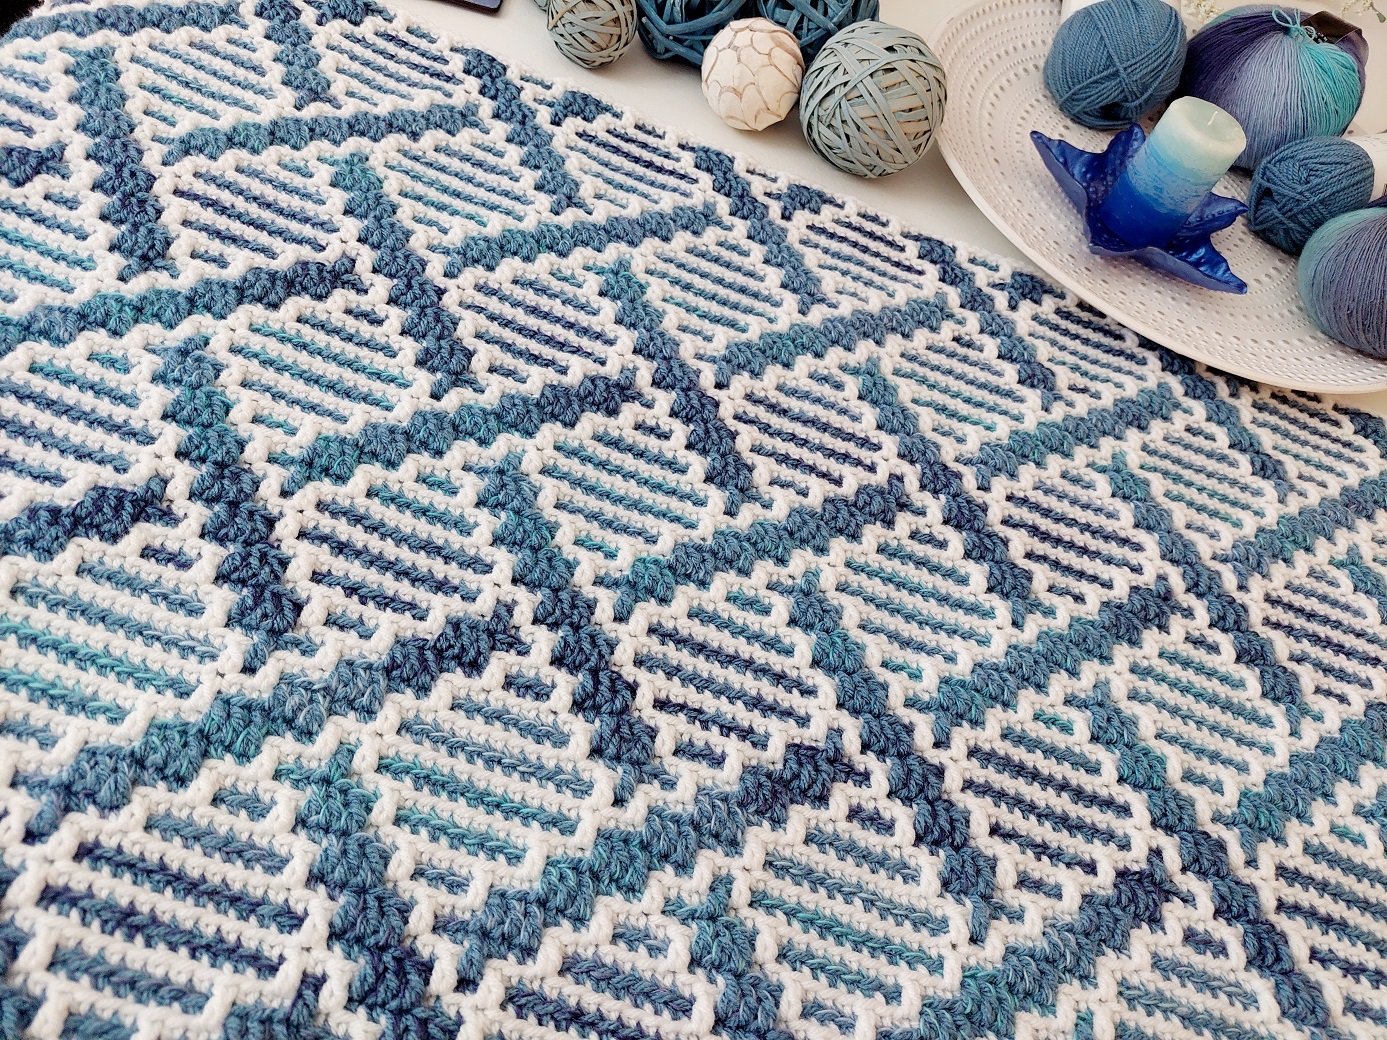 Mosaic Crochet Pattern Book 